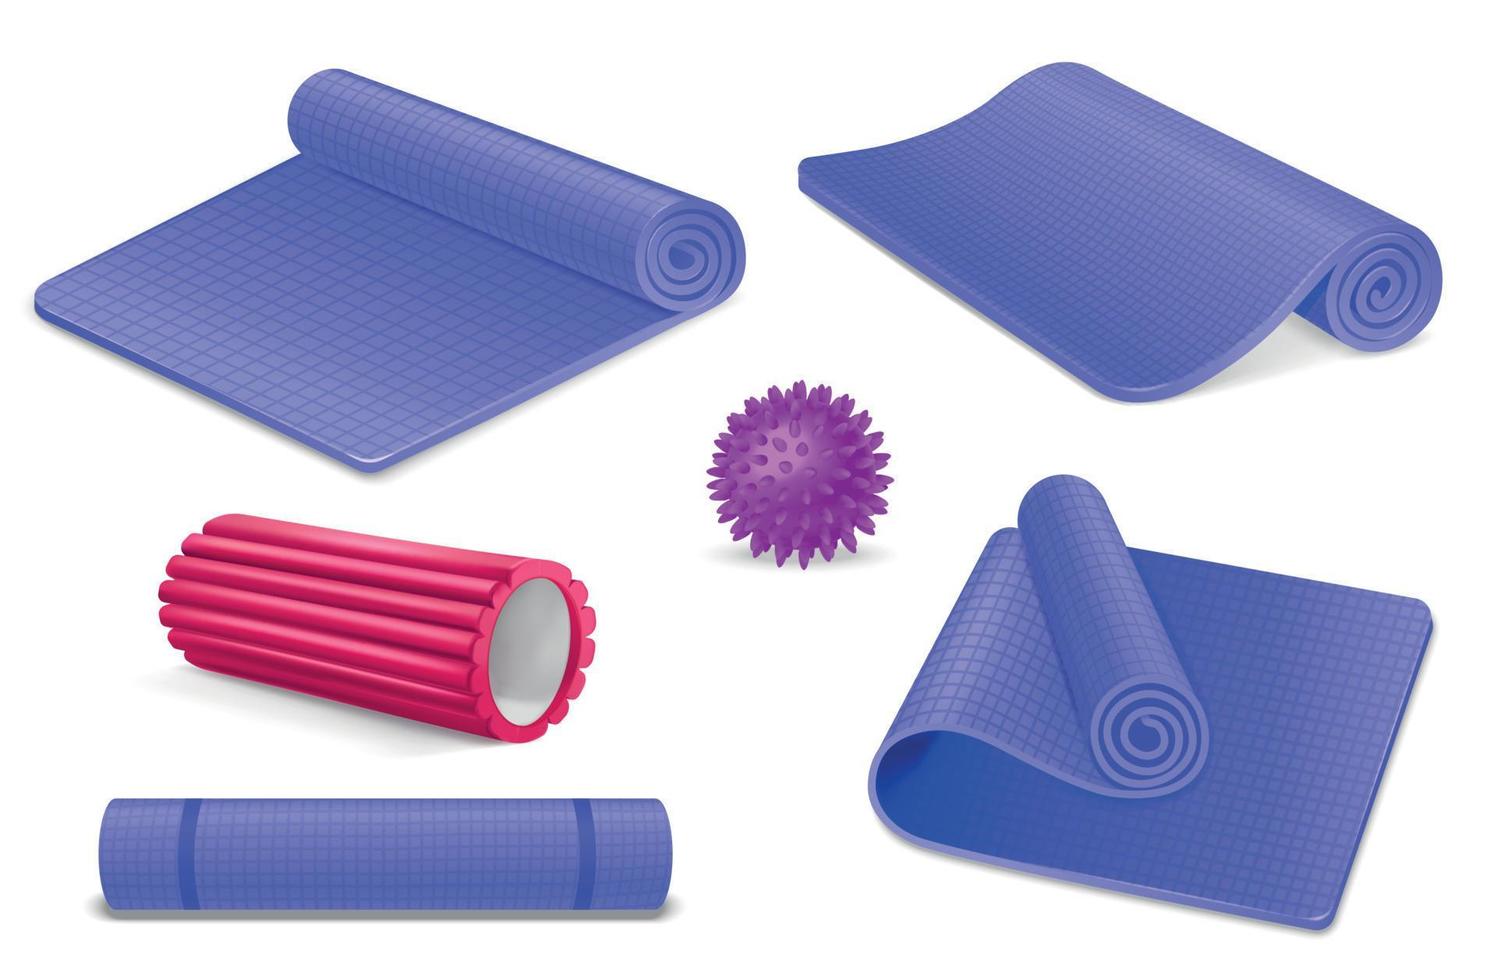 Realistic Yoga and Massage Equipment Set vector